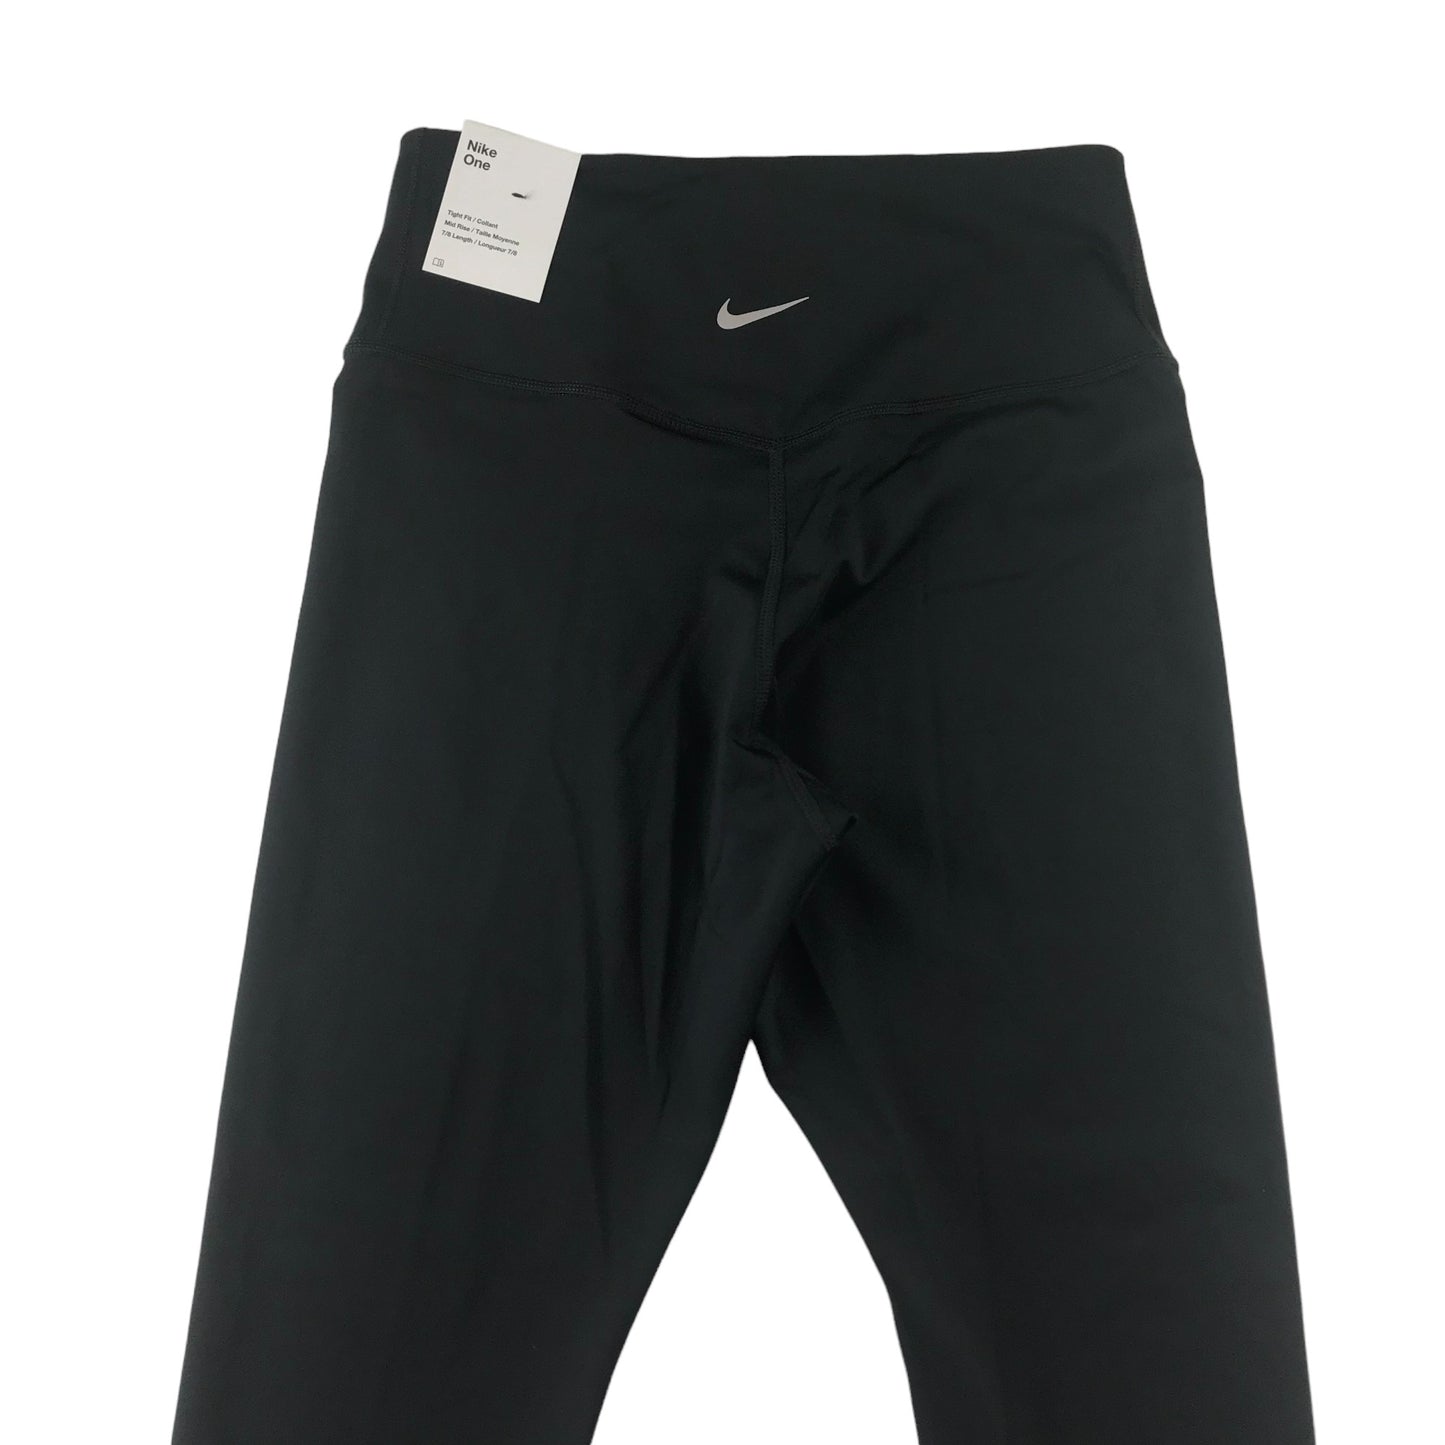 Nike One Sports Leggings Size Small Black with White Nike Logo